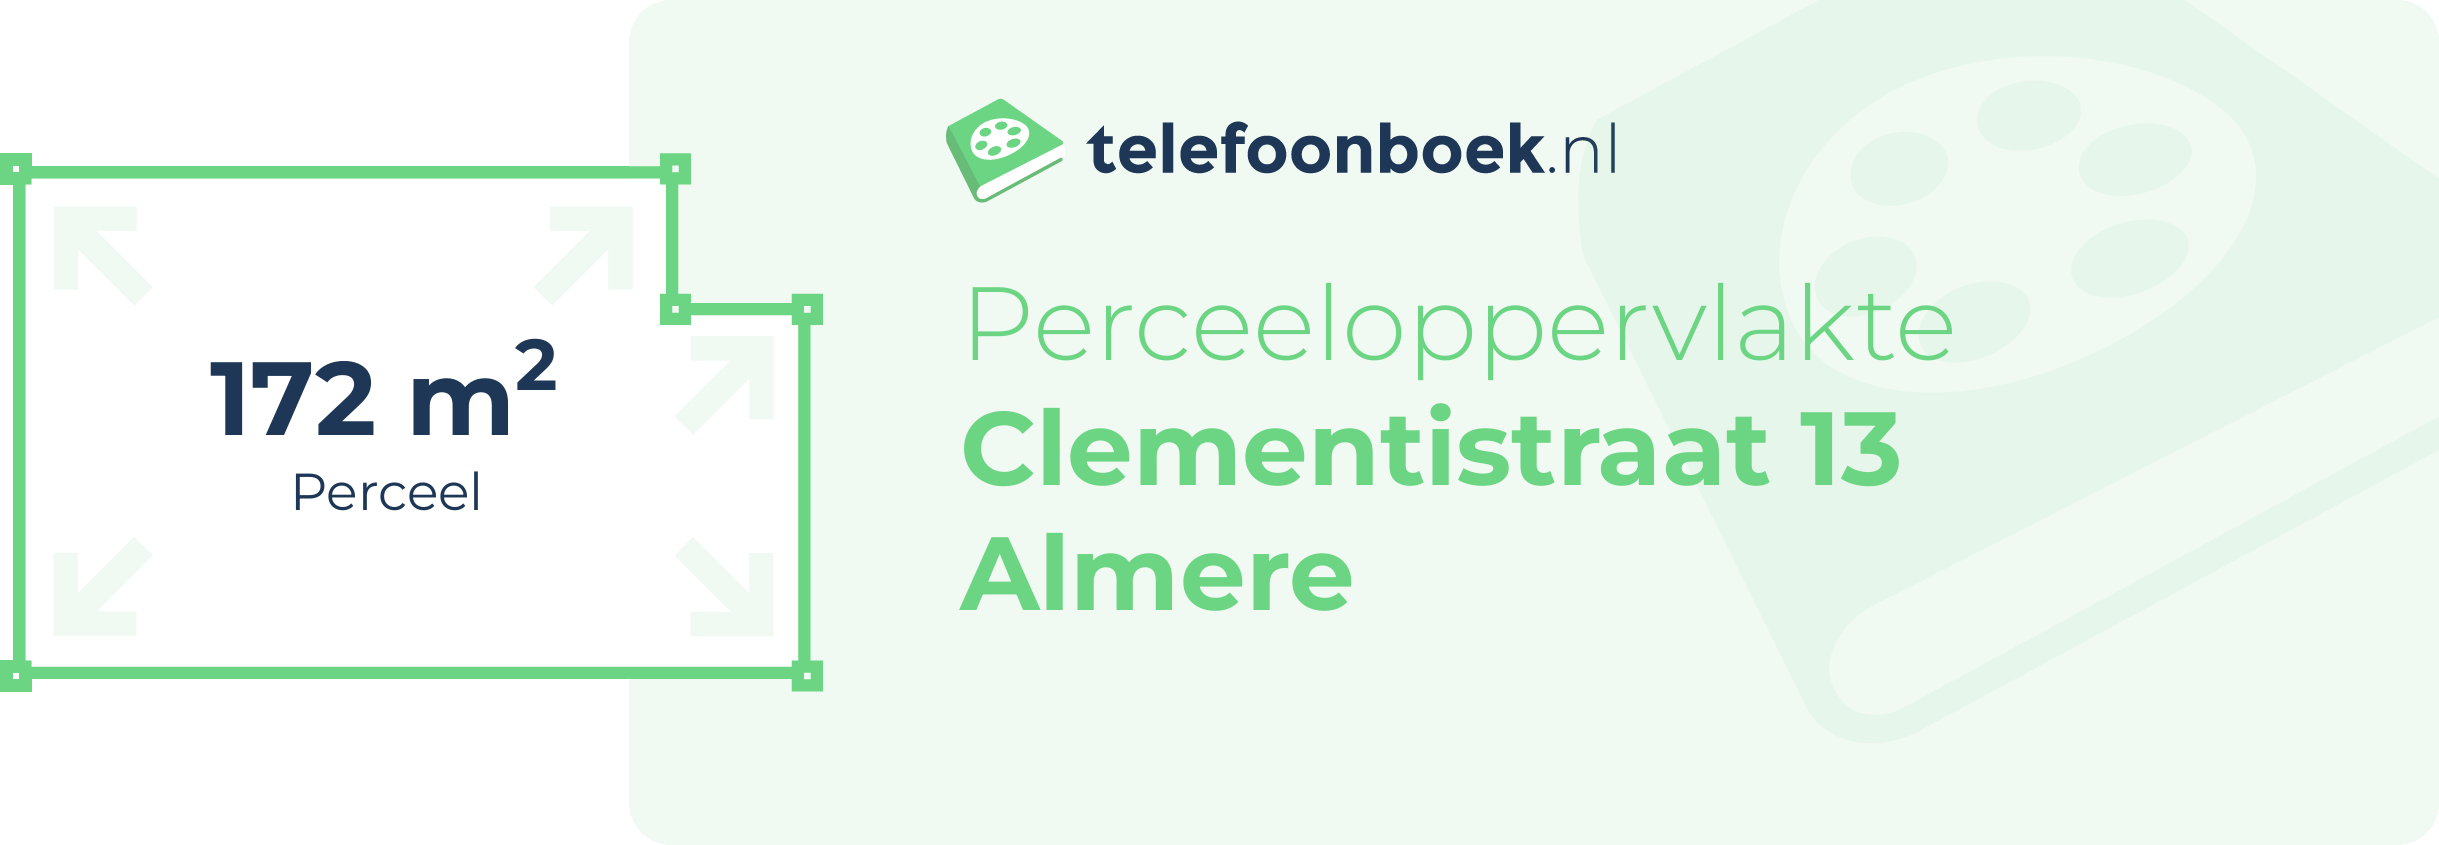 Perceeloppervlakte Clementistraat 13 Almere